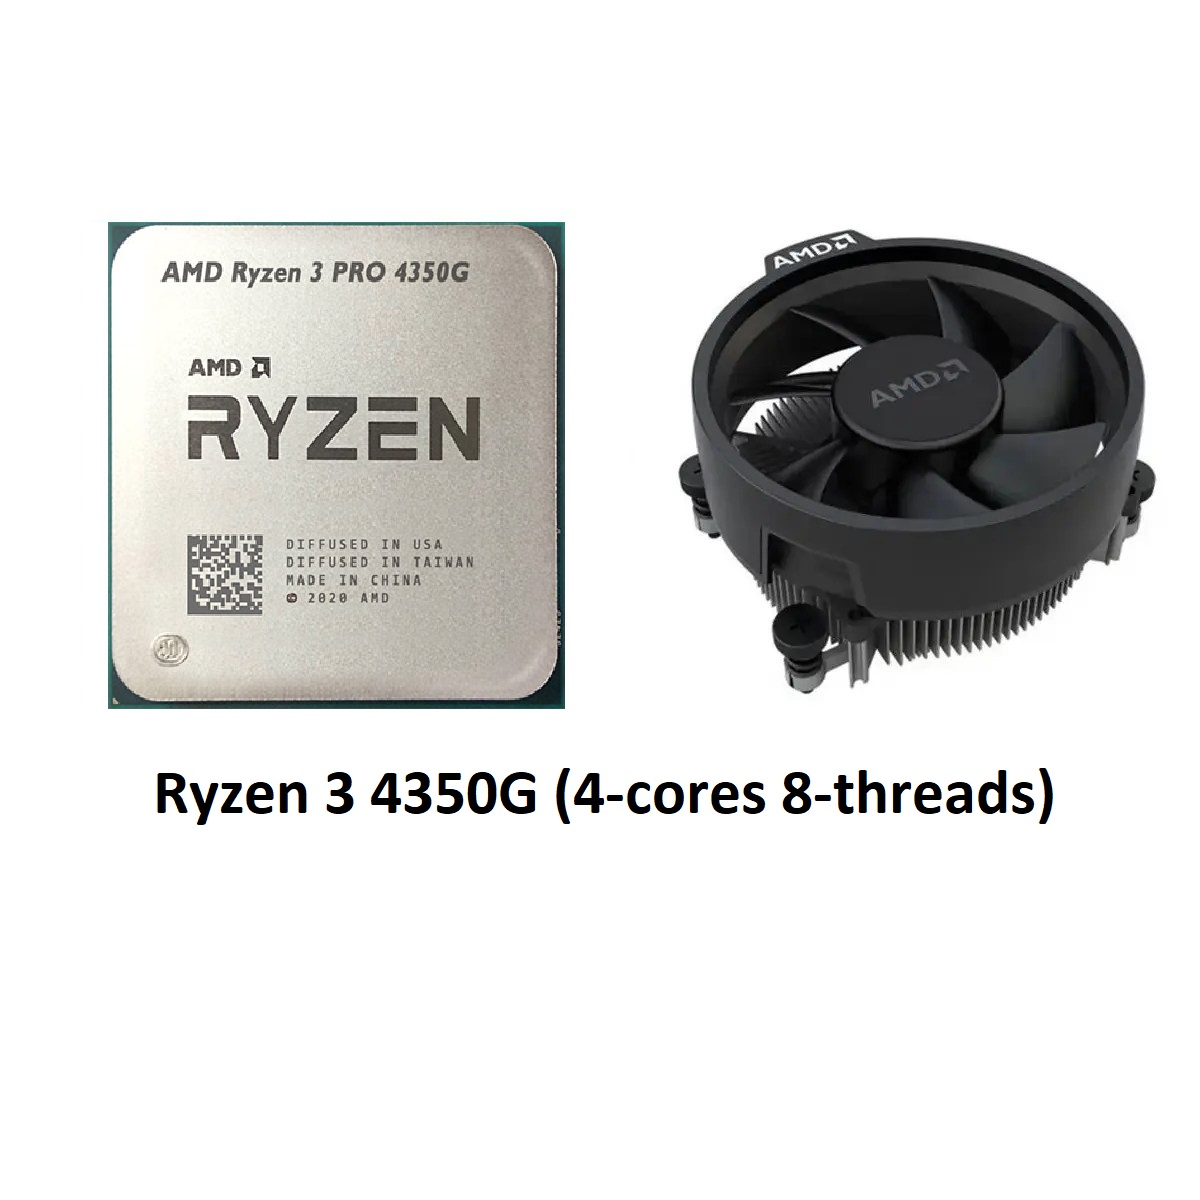 3 pro 4350g. Кулер AMD Ryzen 3 Pro 4350g. AMD Ryzen 3 Pro 4350g am4, 4 x 3800 МГЦ. Ryzen 3 4350g Pro в 3d. Ryzen 3 4350g характеристика.